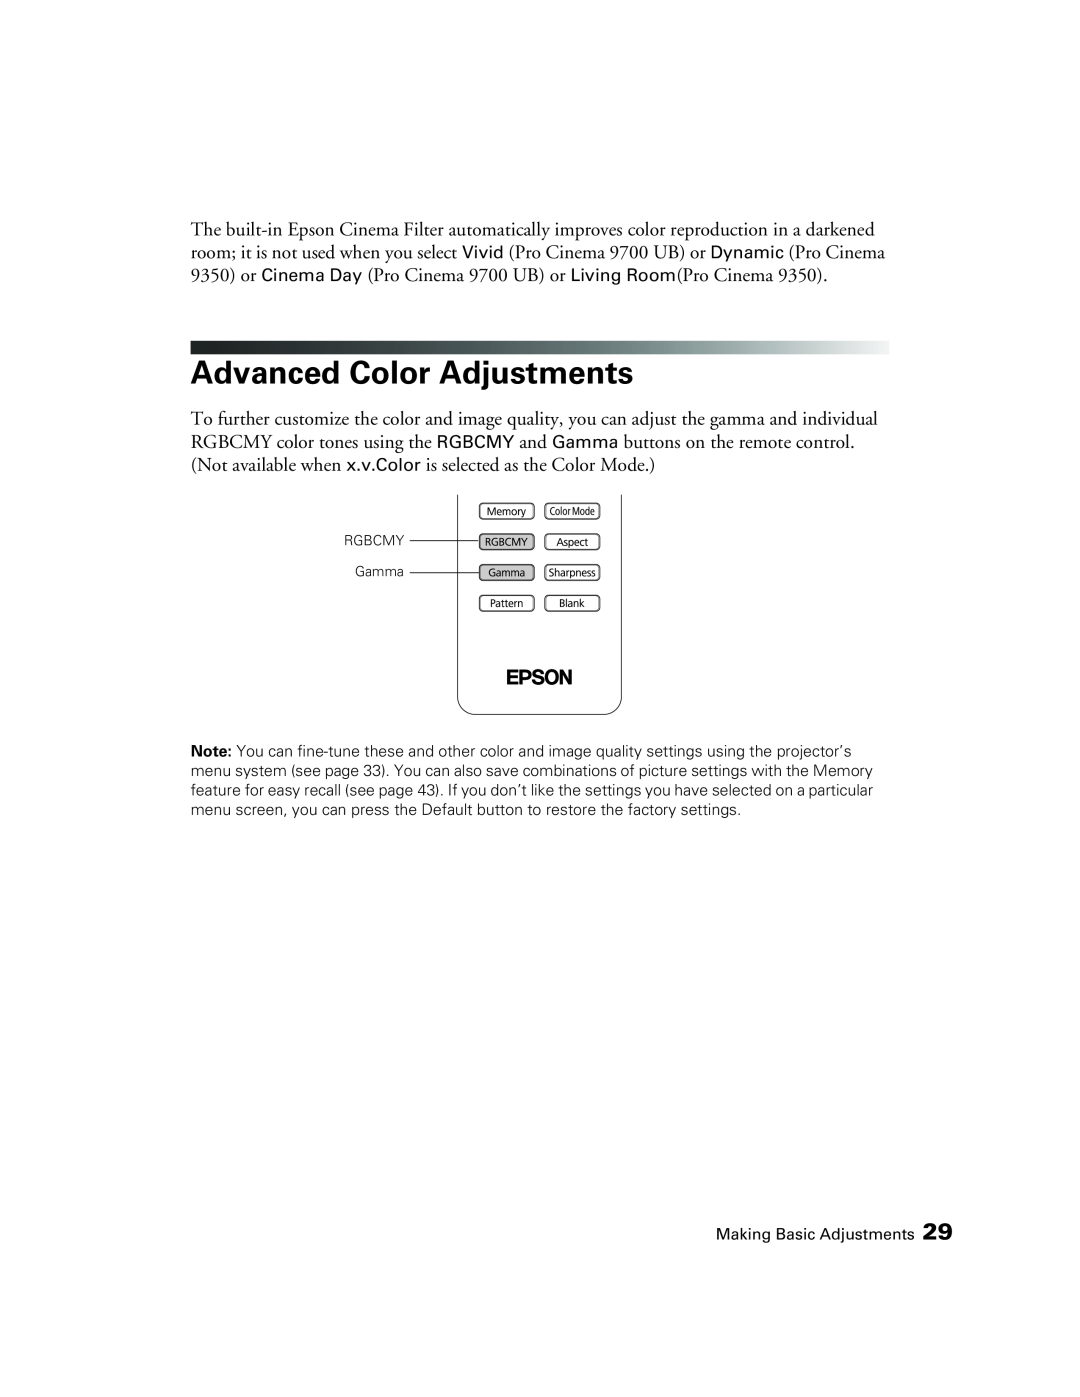 Epson 9700, 9350 manual Advanced Color Adjustments 